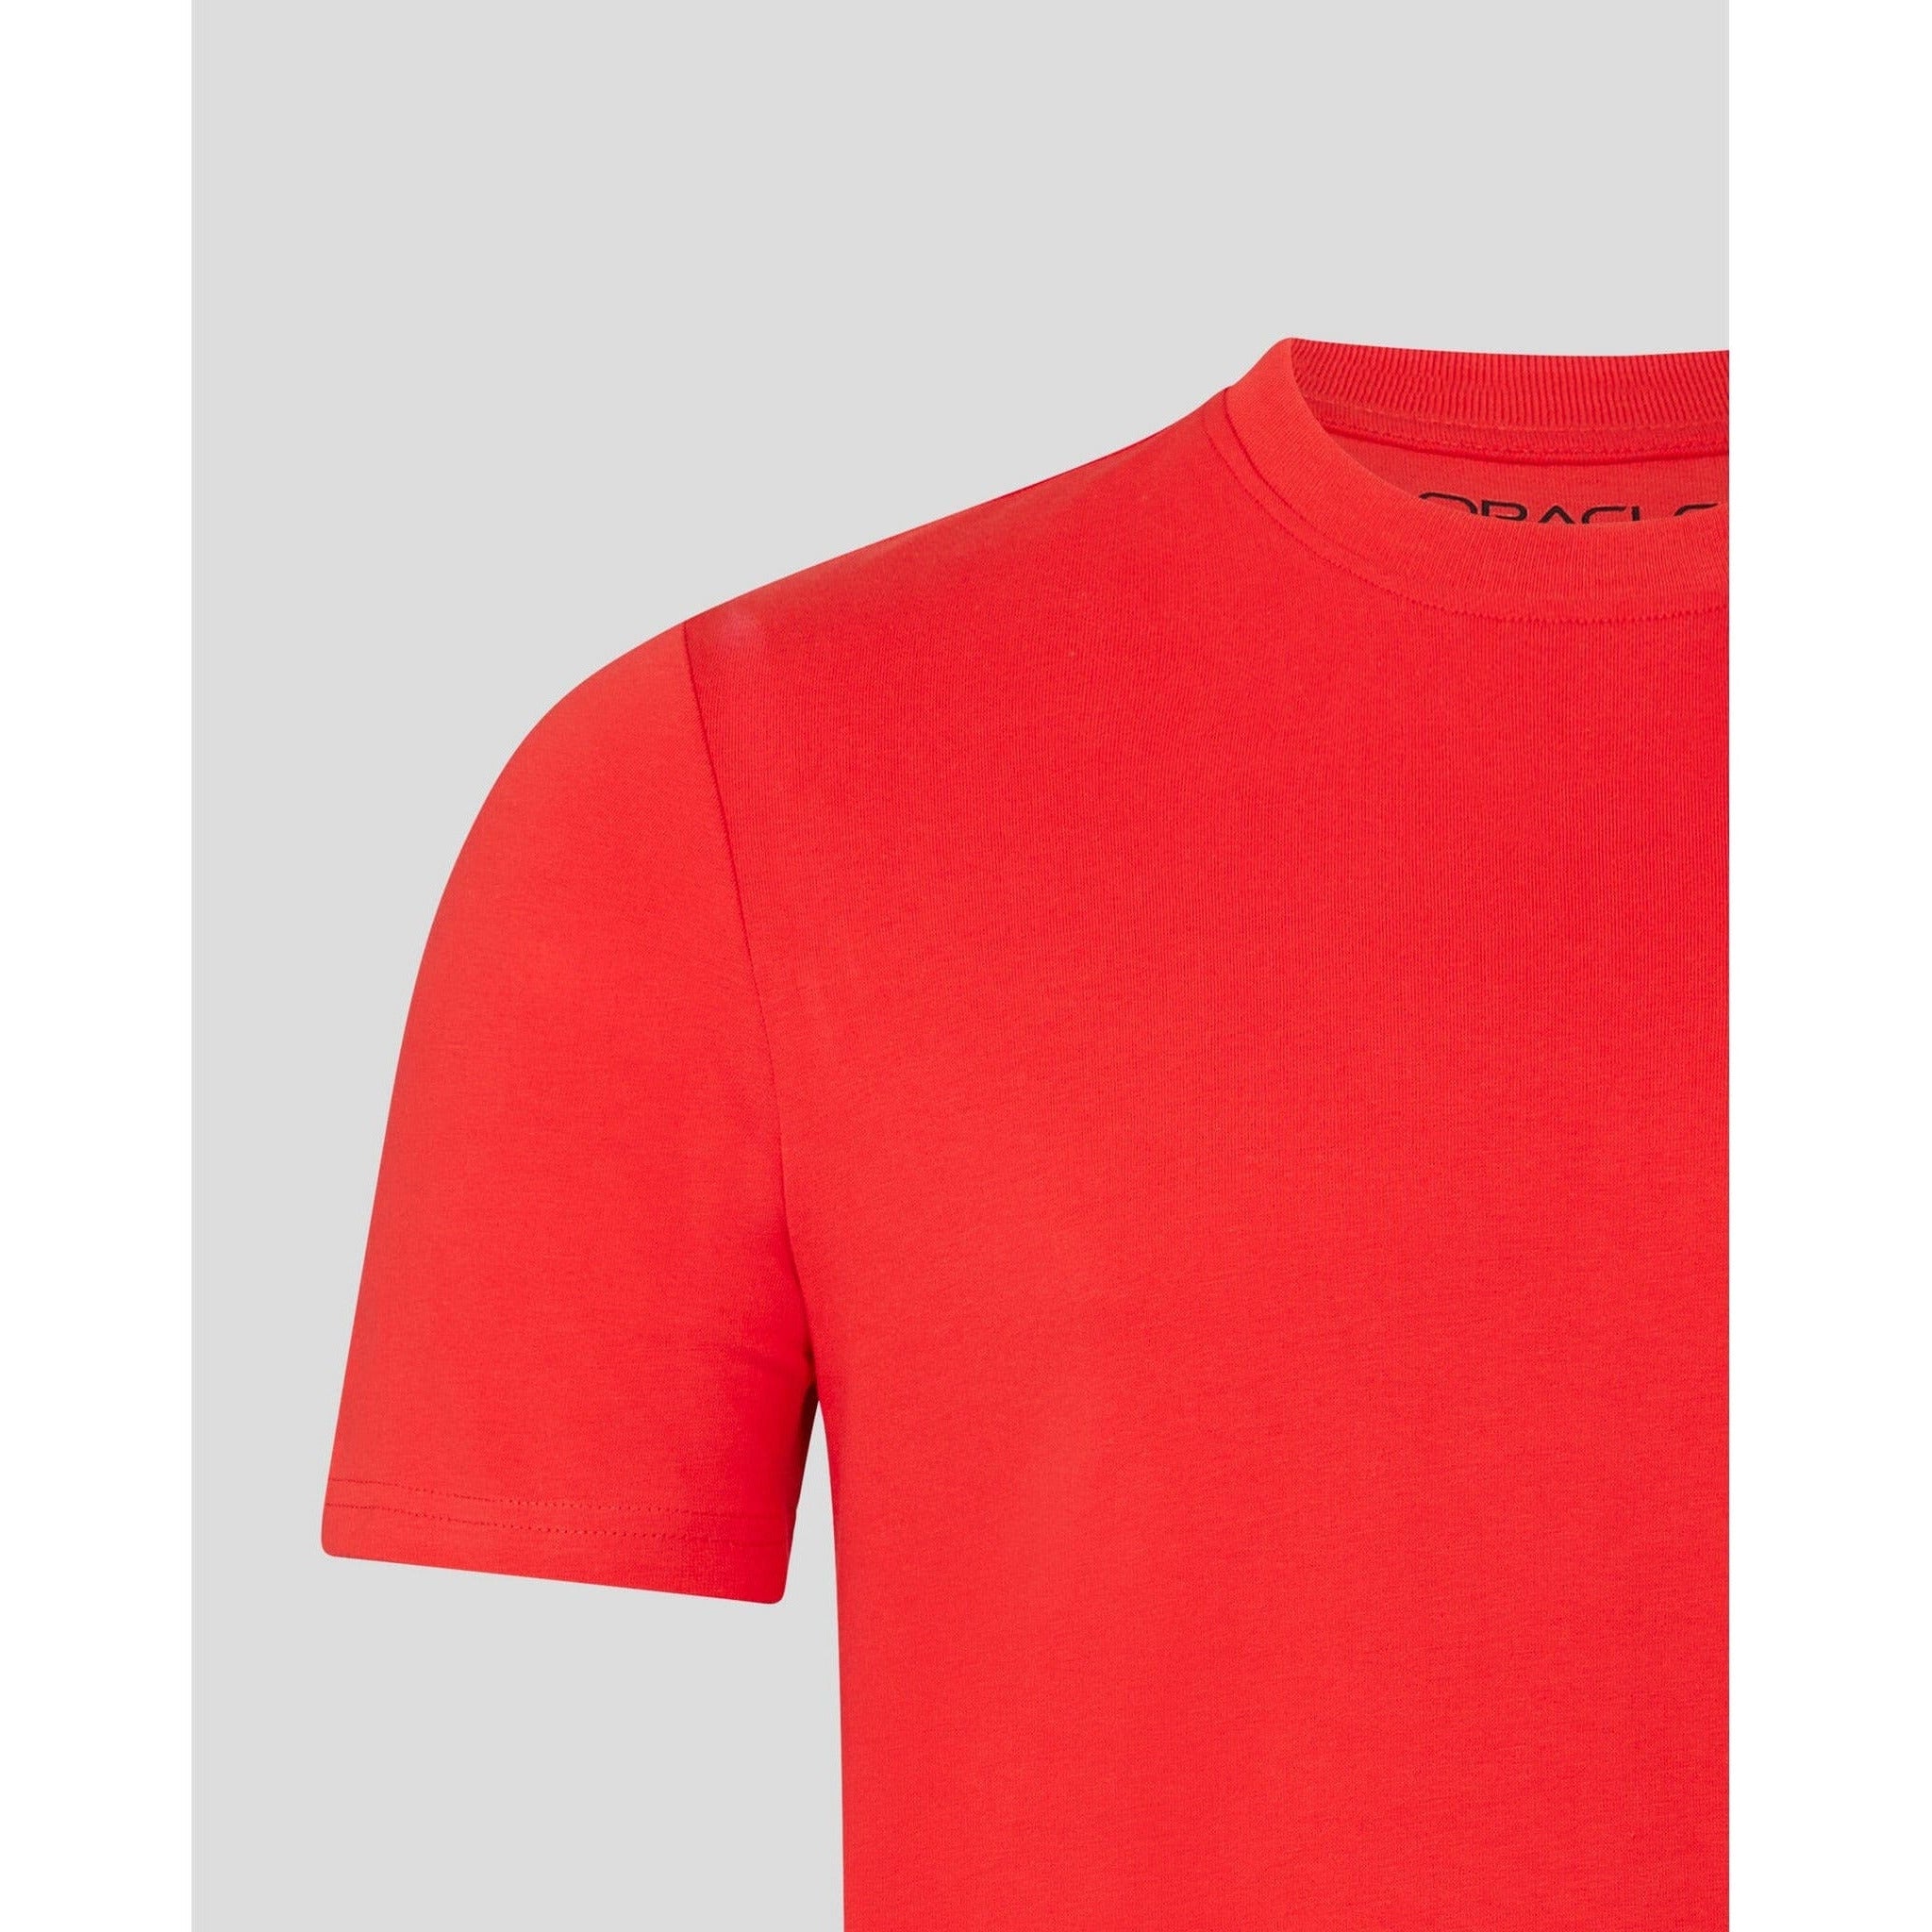 Oracle Red Bull Racing Large Logo T-Shirt - Orange - Unisex